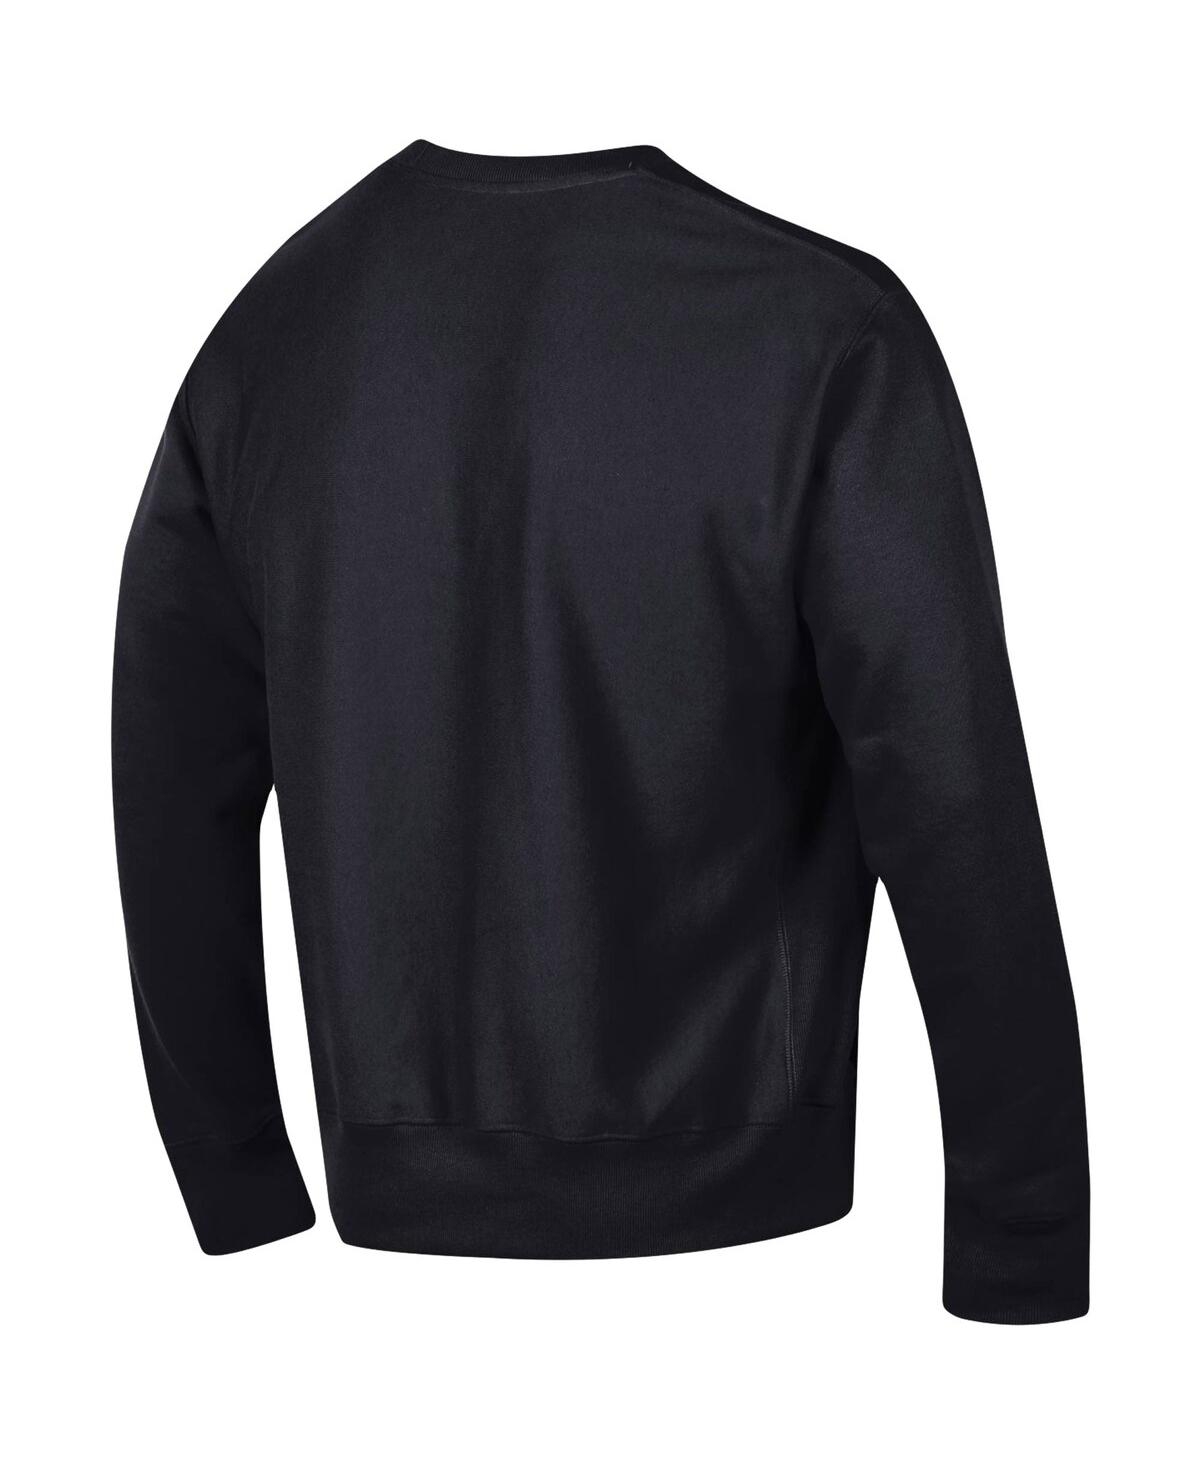 Shop Champion Men's  Black Army Black Knights Arch Reverse Weave Pullover Sweatshirt